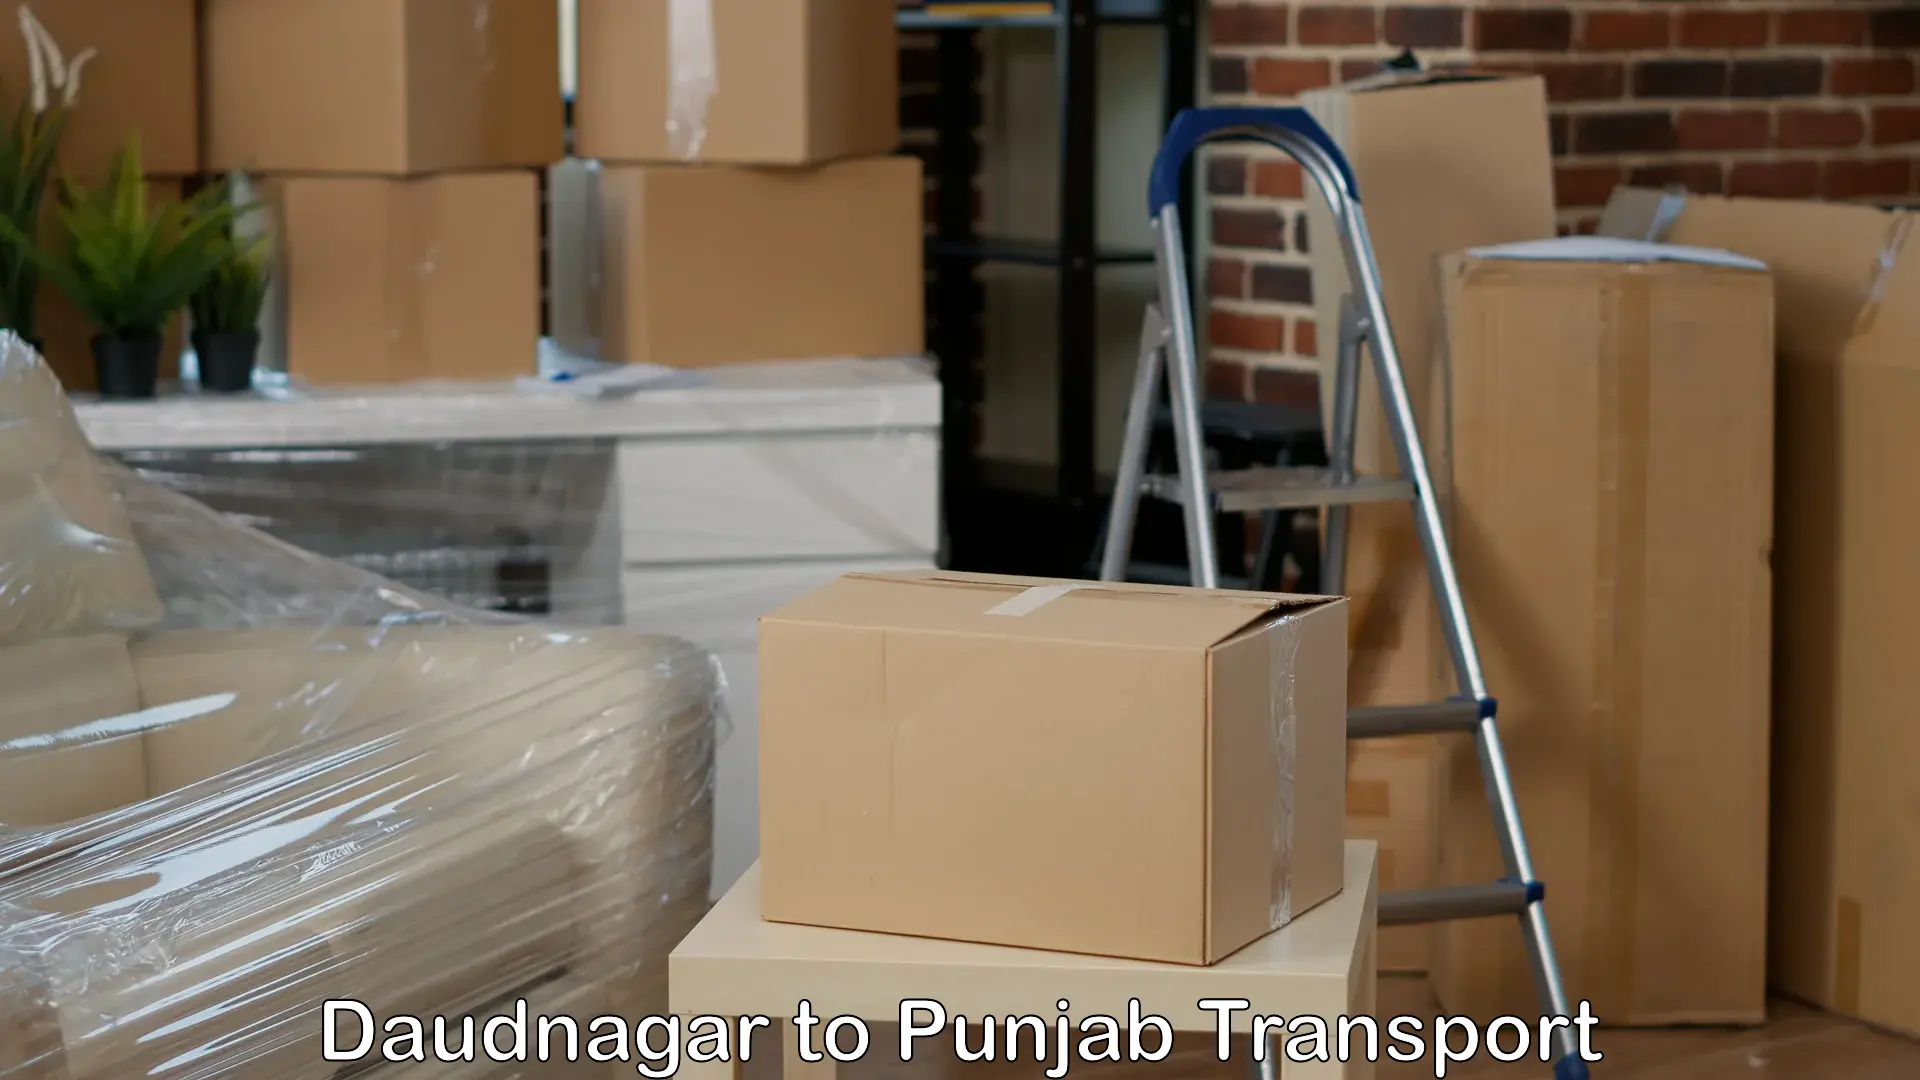 Road transport online services in Daudnagar to Abohar